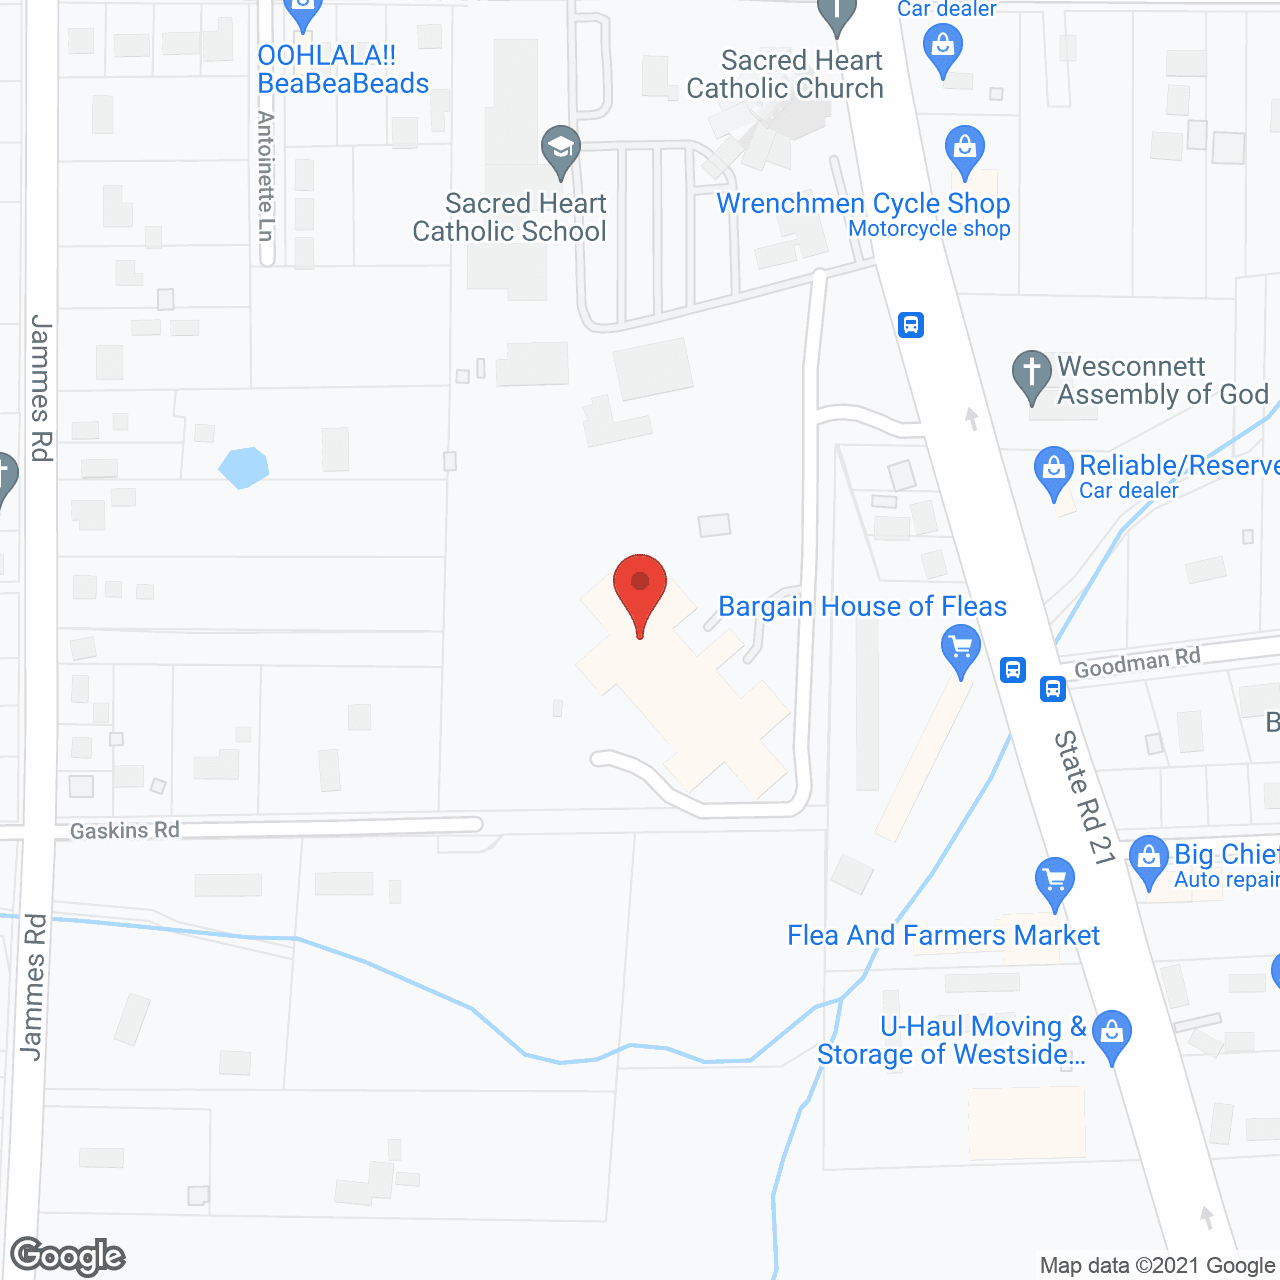 Cross Care Center in google map